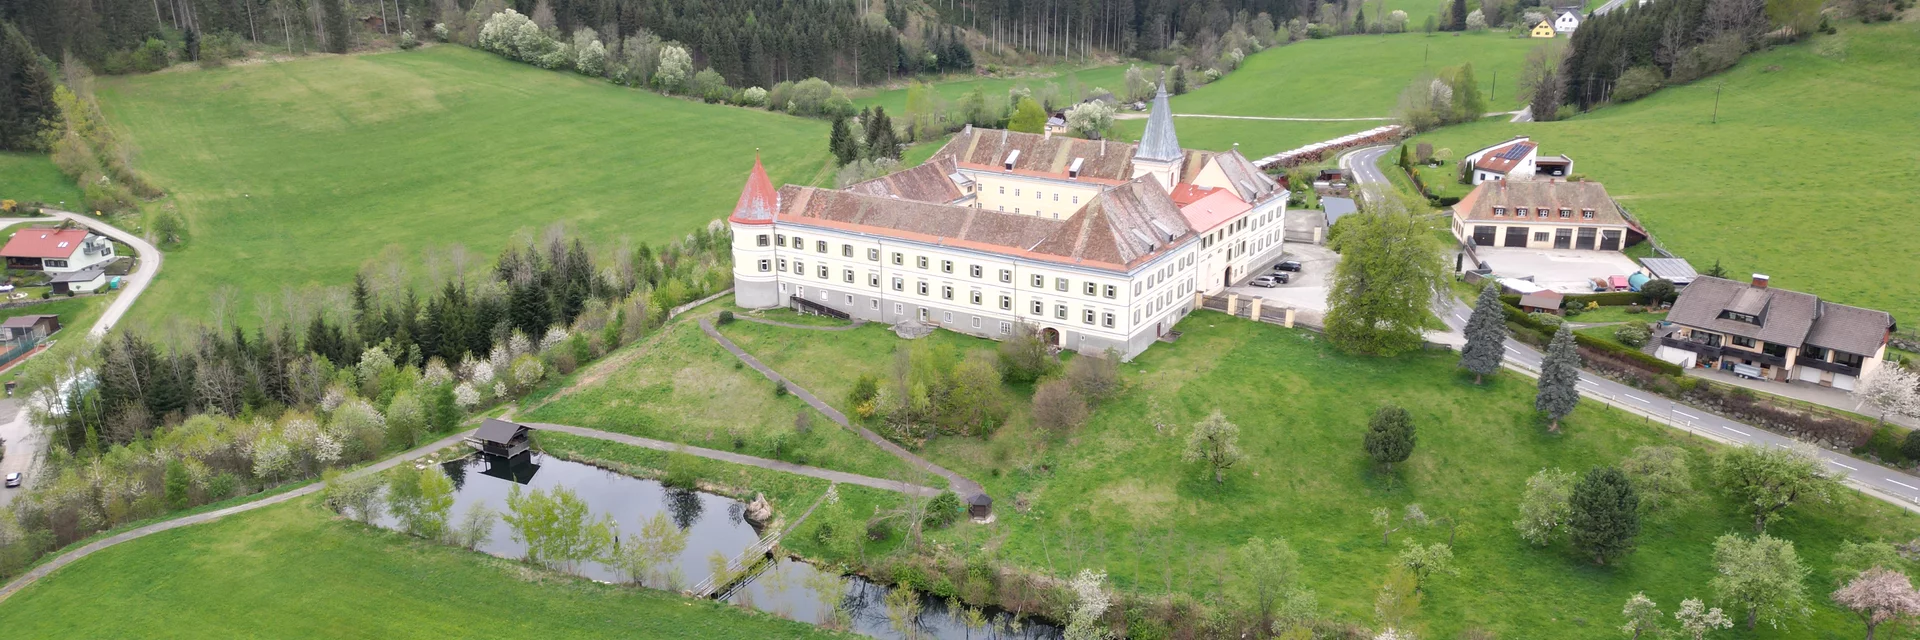 Gaal - Schloss Wasserburg | © Erlebnisregion Murtal | Isabella Painhapp